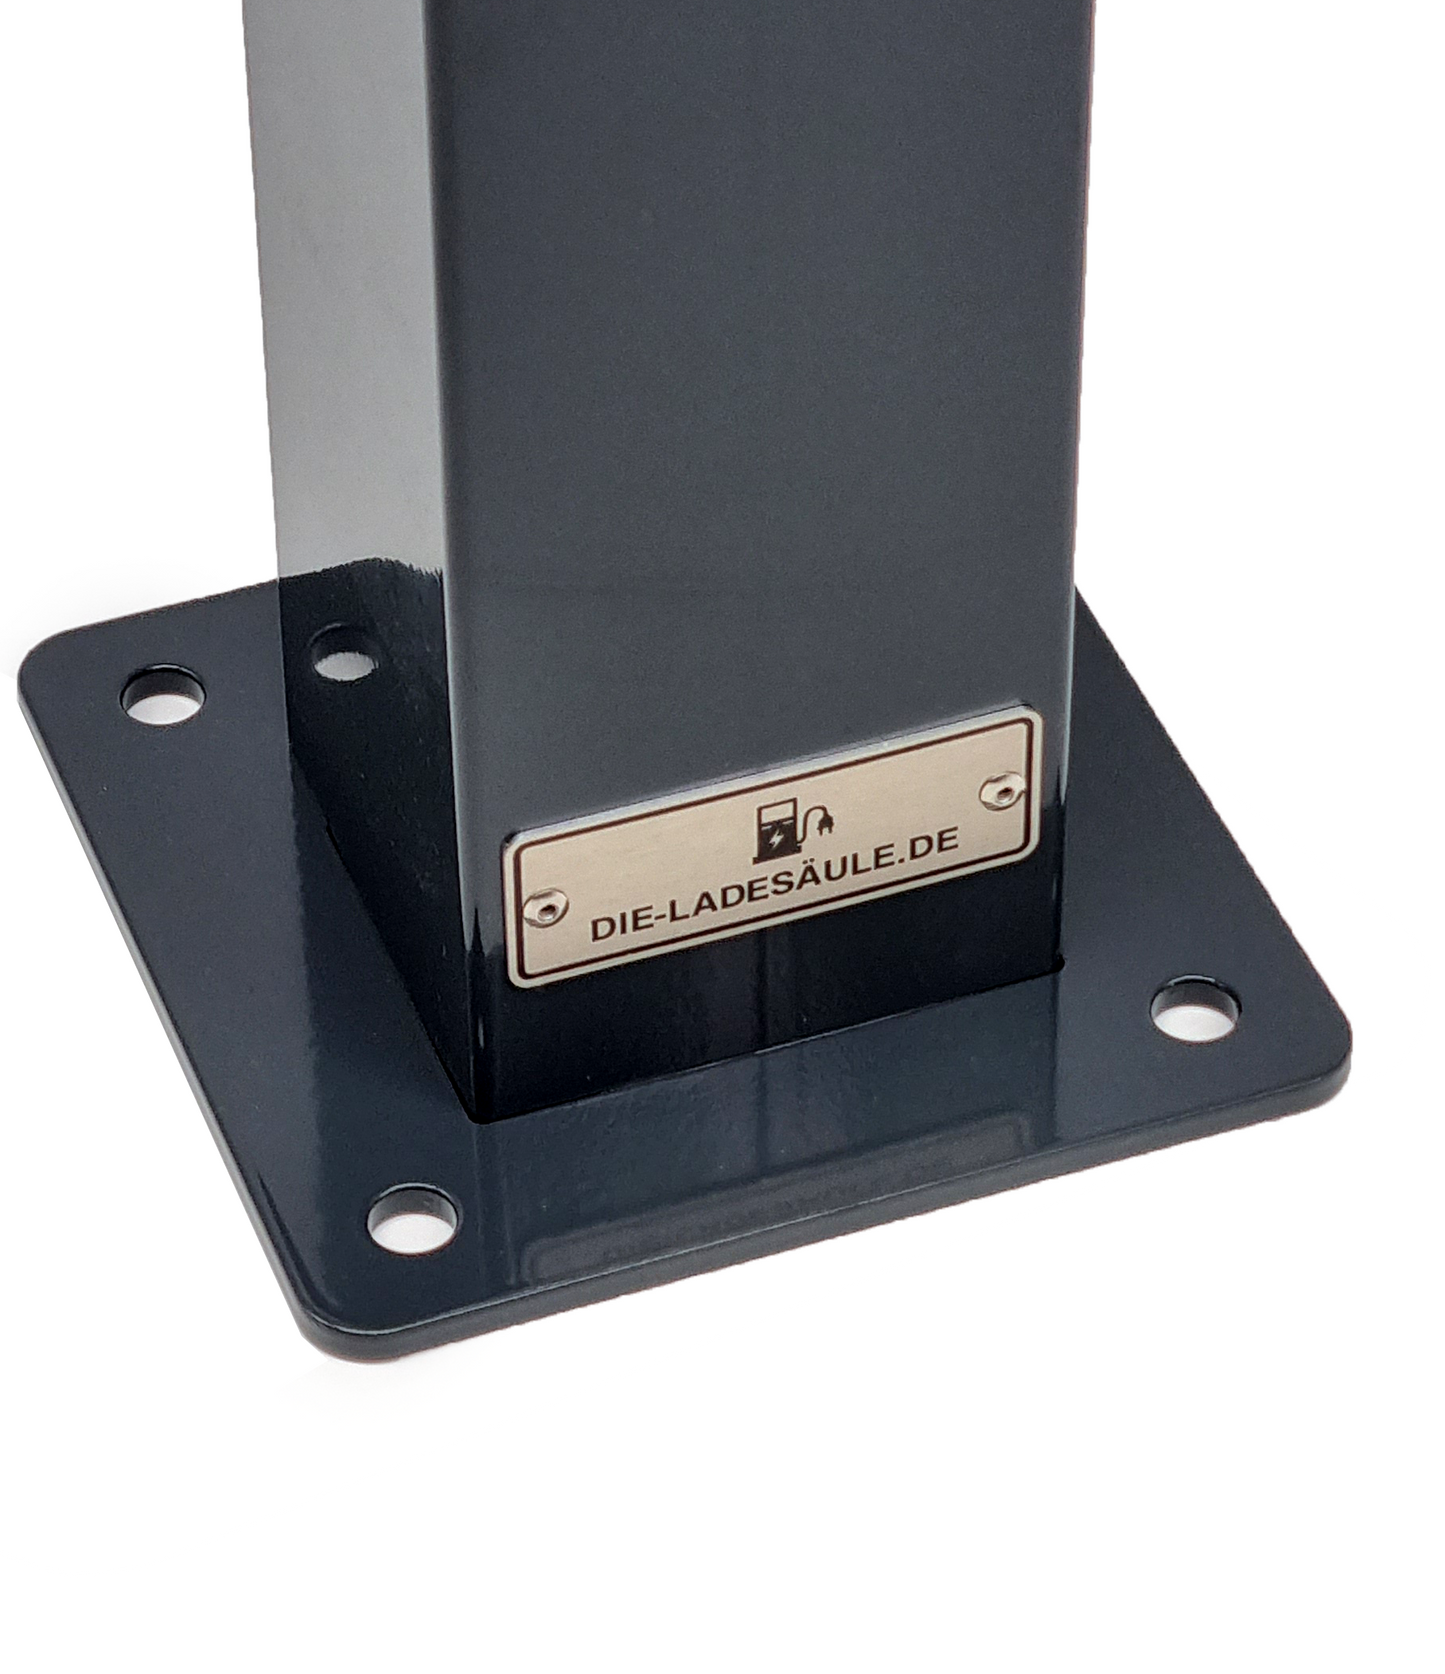 Laadpaal geschikt voor Mennekes Amtrom Charge Control Wallbox met Dak | Voet | Voetstuk | Voetstuk